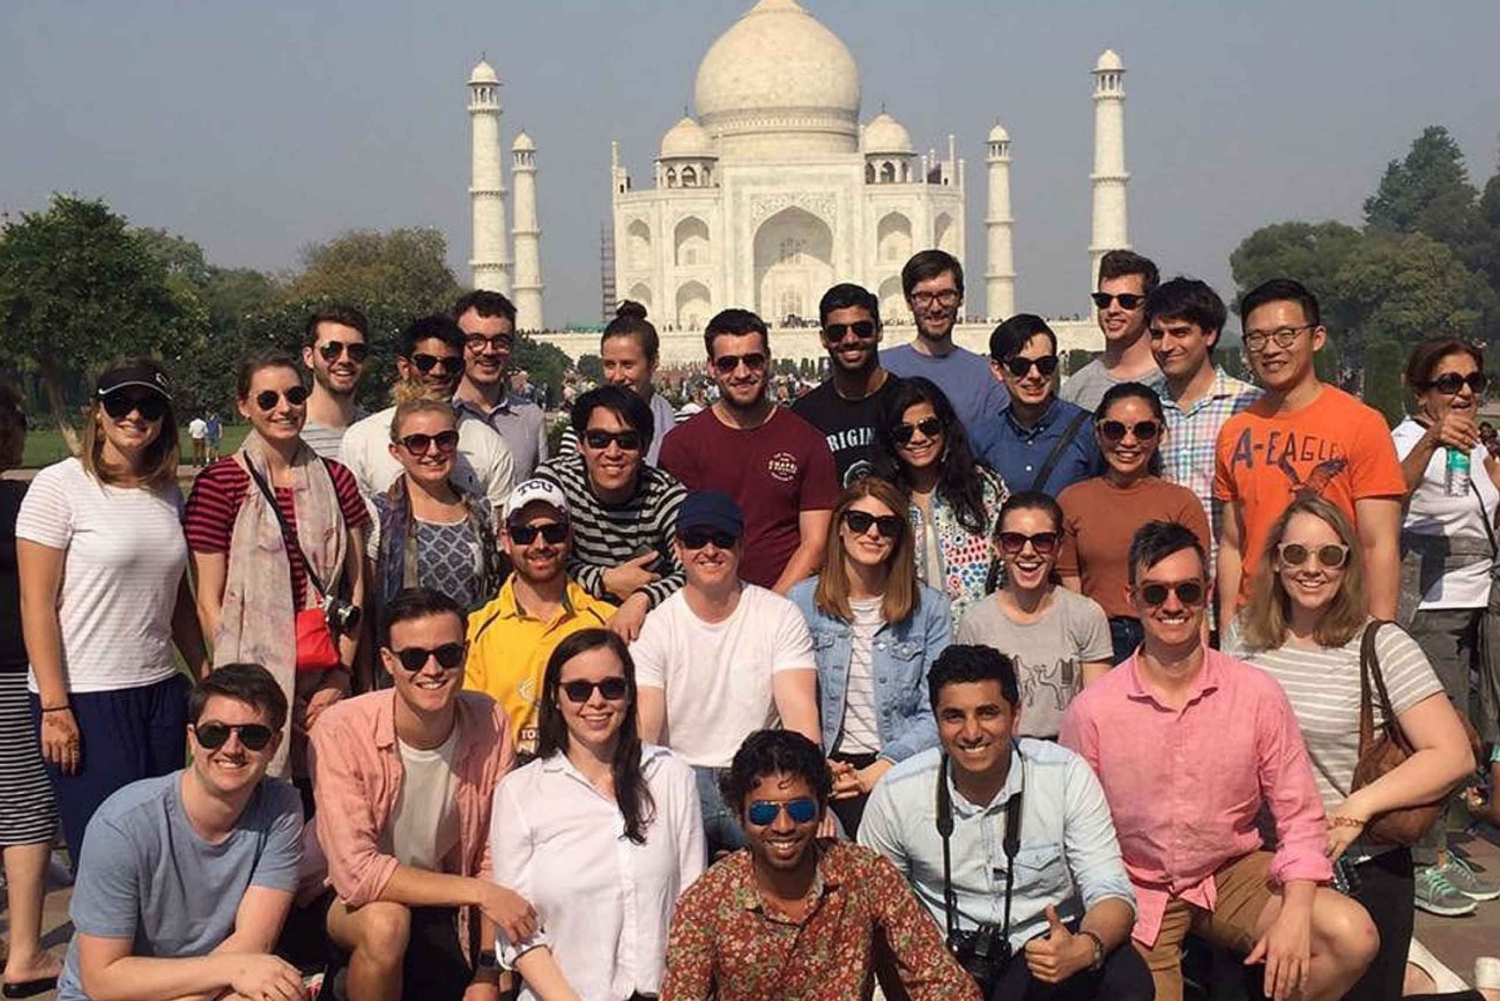 Vanuit Delhi: Luxe 4-daagse Gouden Driehoek privétour